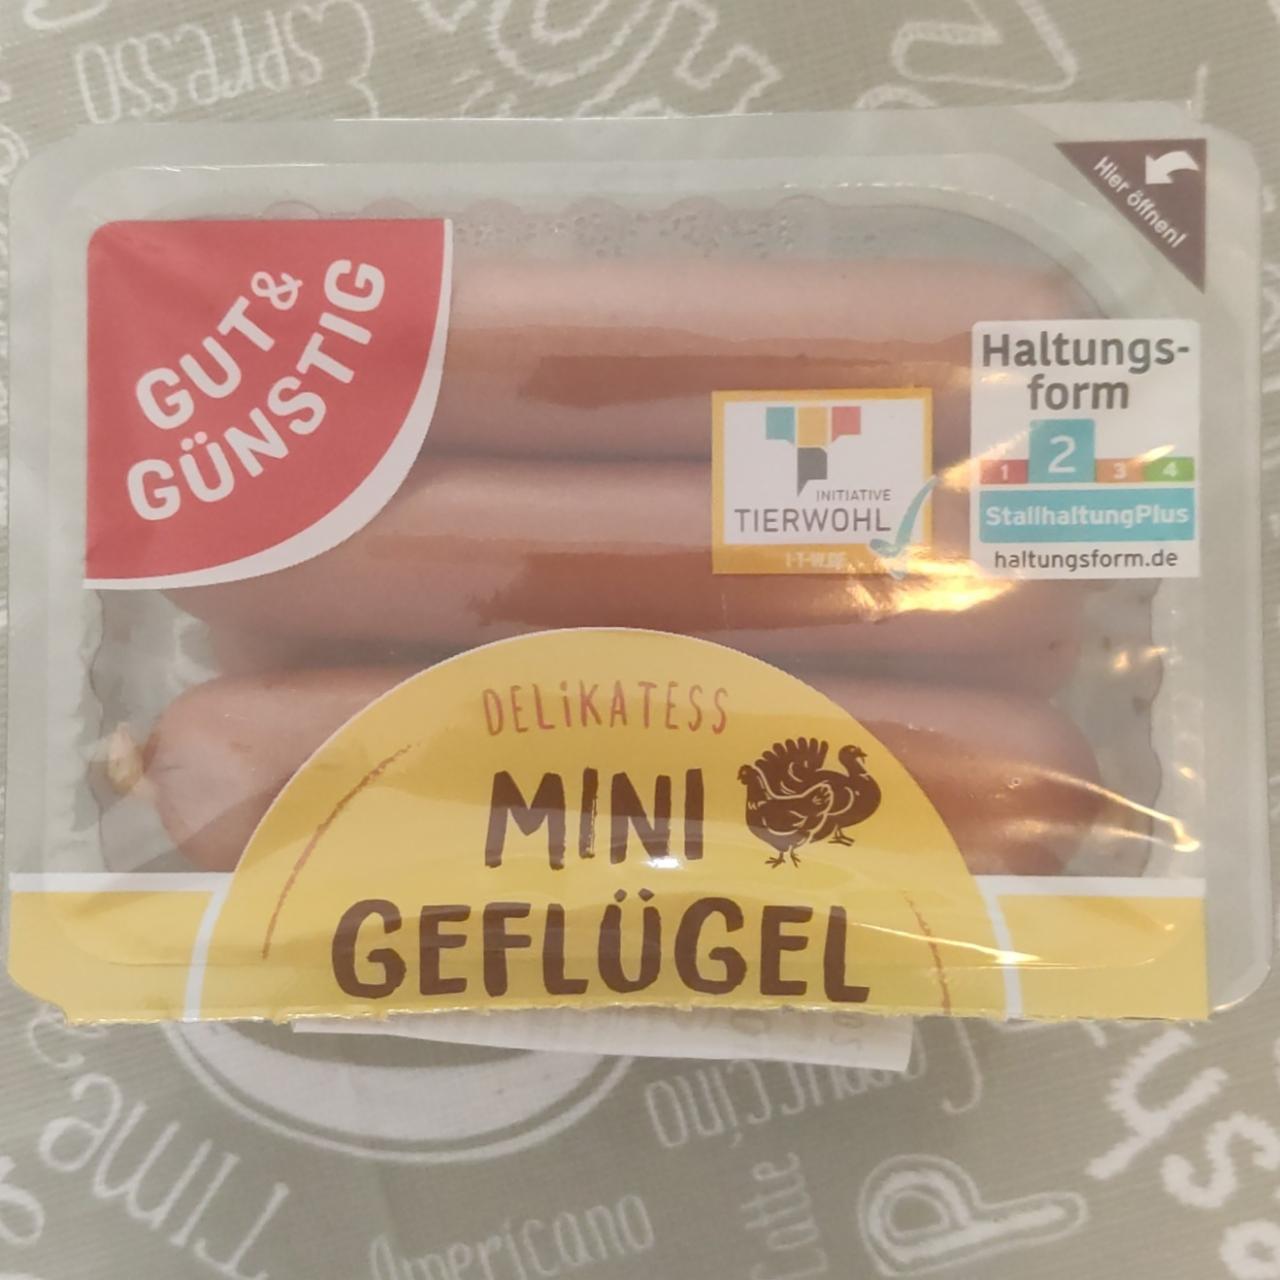 Фото - Delikatess Mini geflügel wiener Gut&Günstig